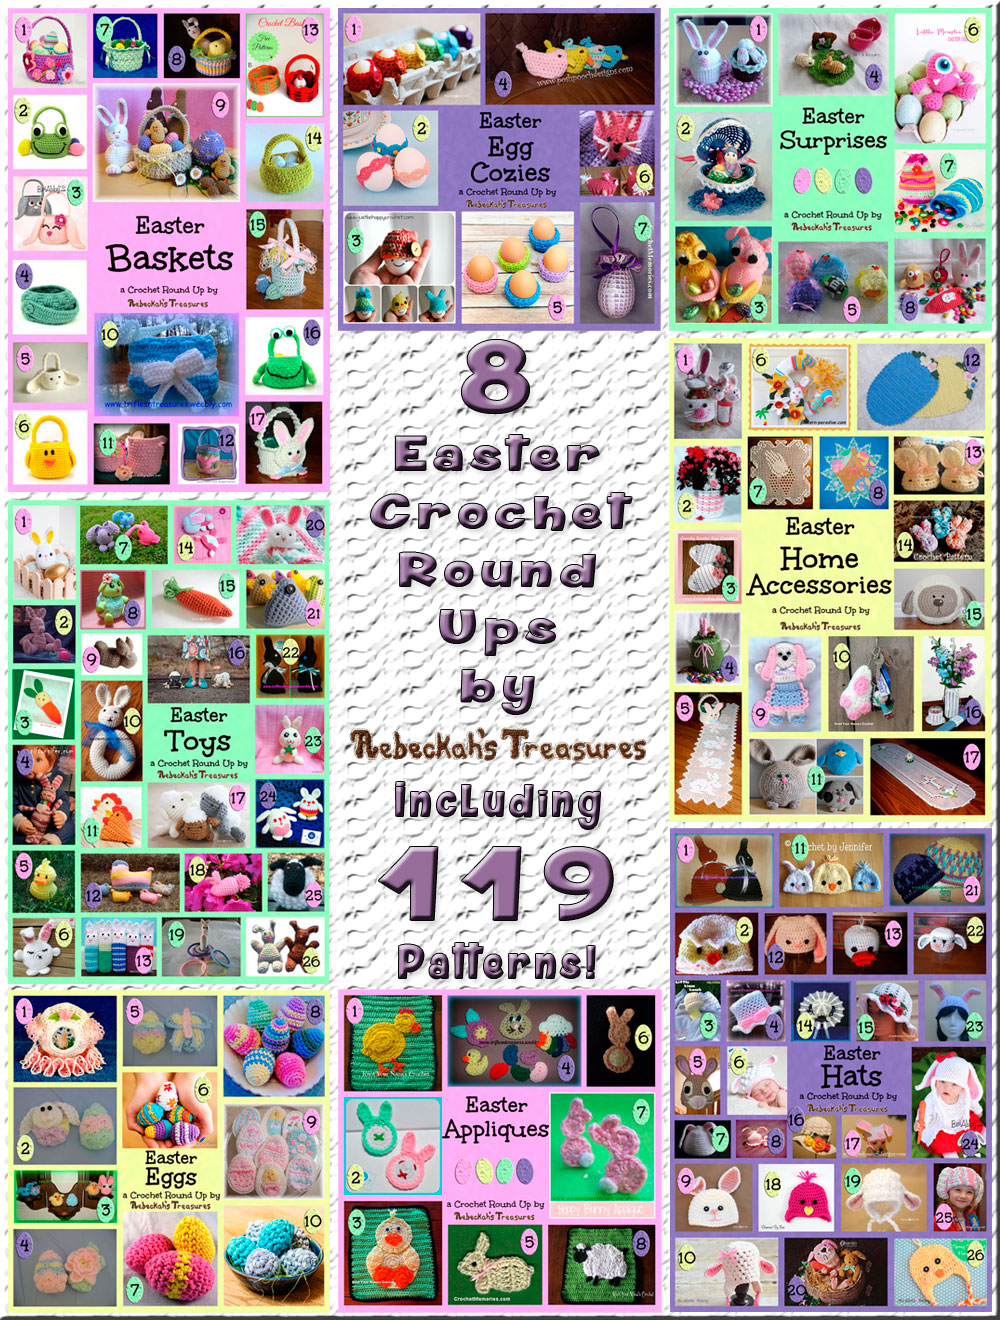 8 Easter Crochet Round Ups by @beckastreasures!